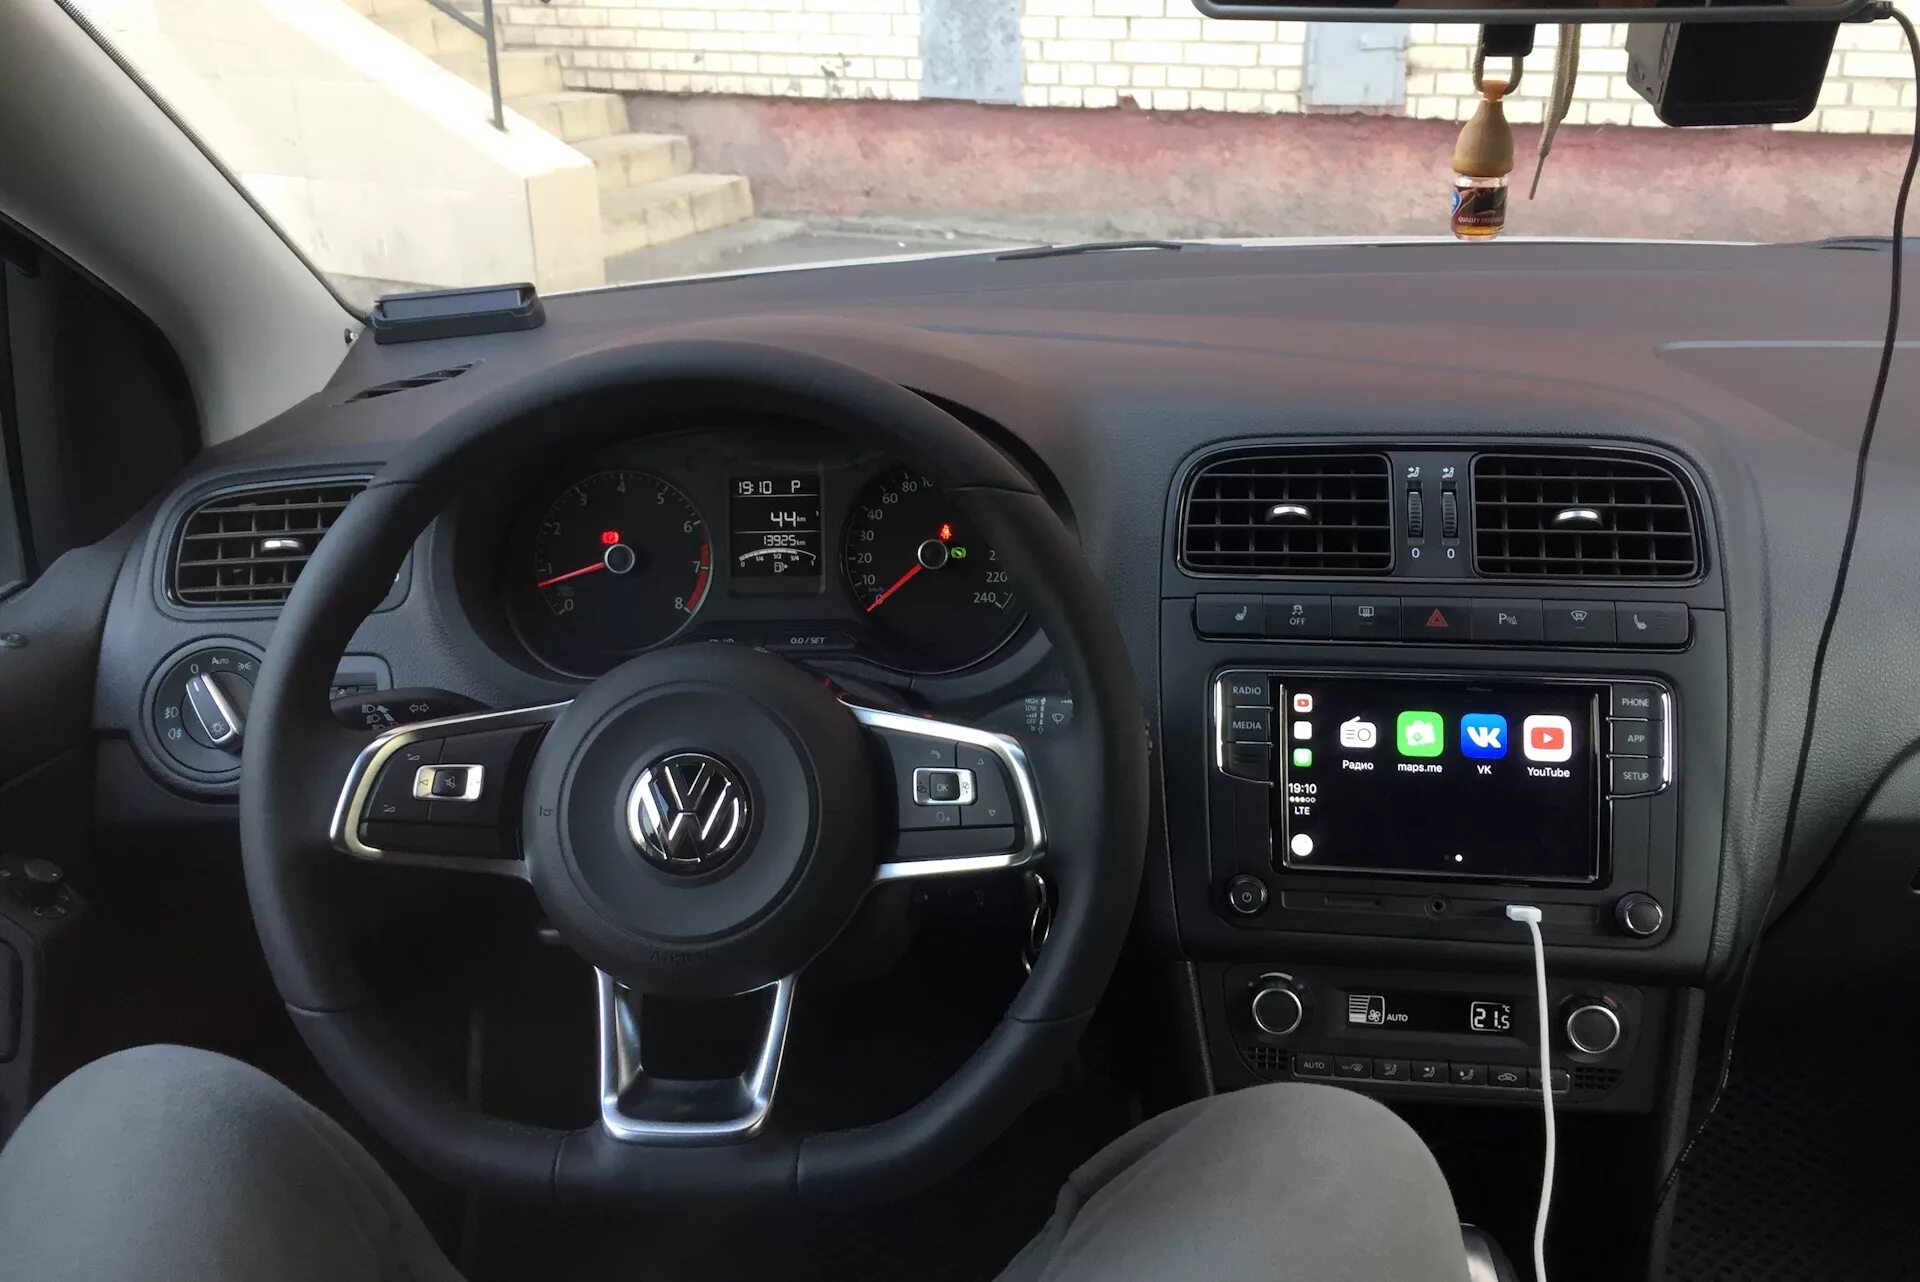 Торпеда фольксваген поло. VW Polo sedan Drive. Polo 2013 салон магнитола. Volkswagen Polo sedan 2017 салон. Тюнинг салона поло седан 2013.